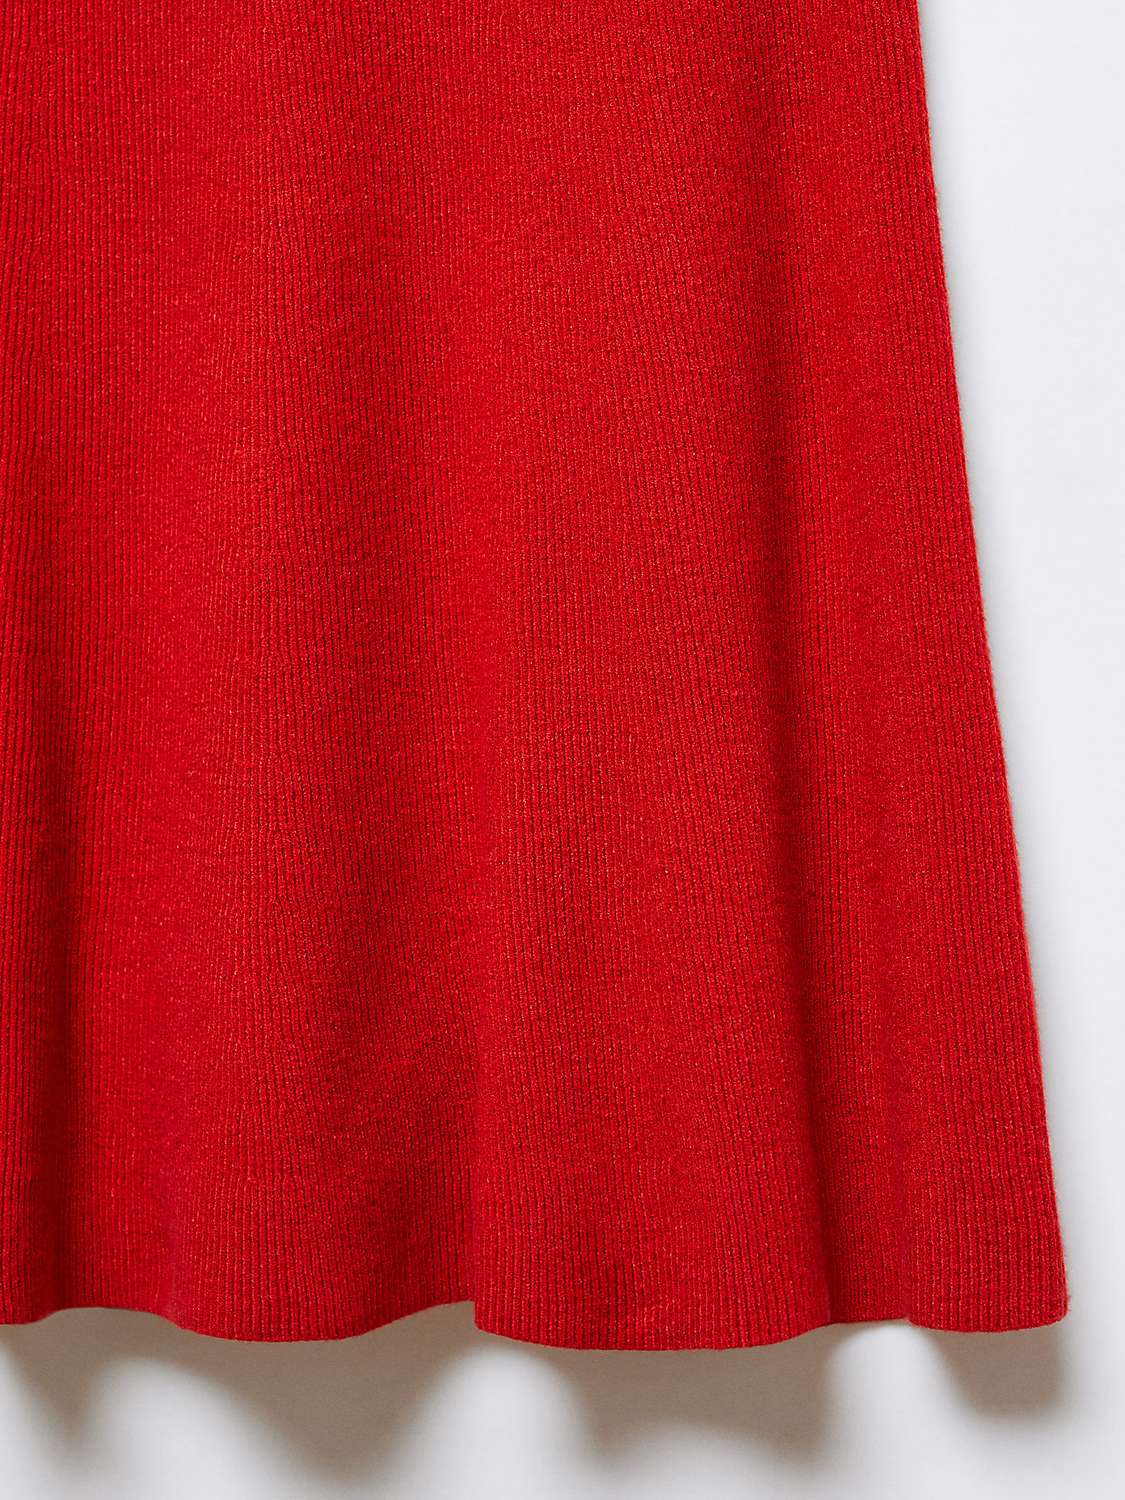 Mango Presley Midi Skirt, Red at John Lewis & Partners